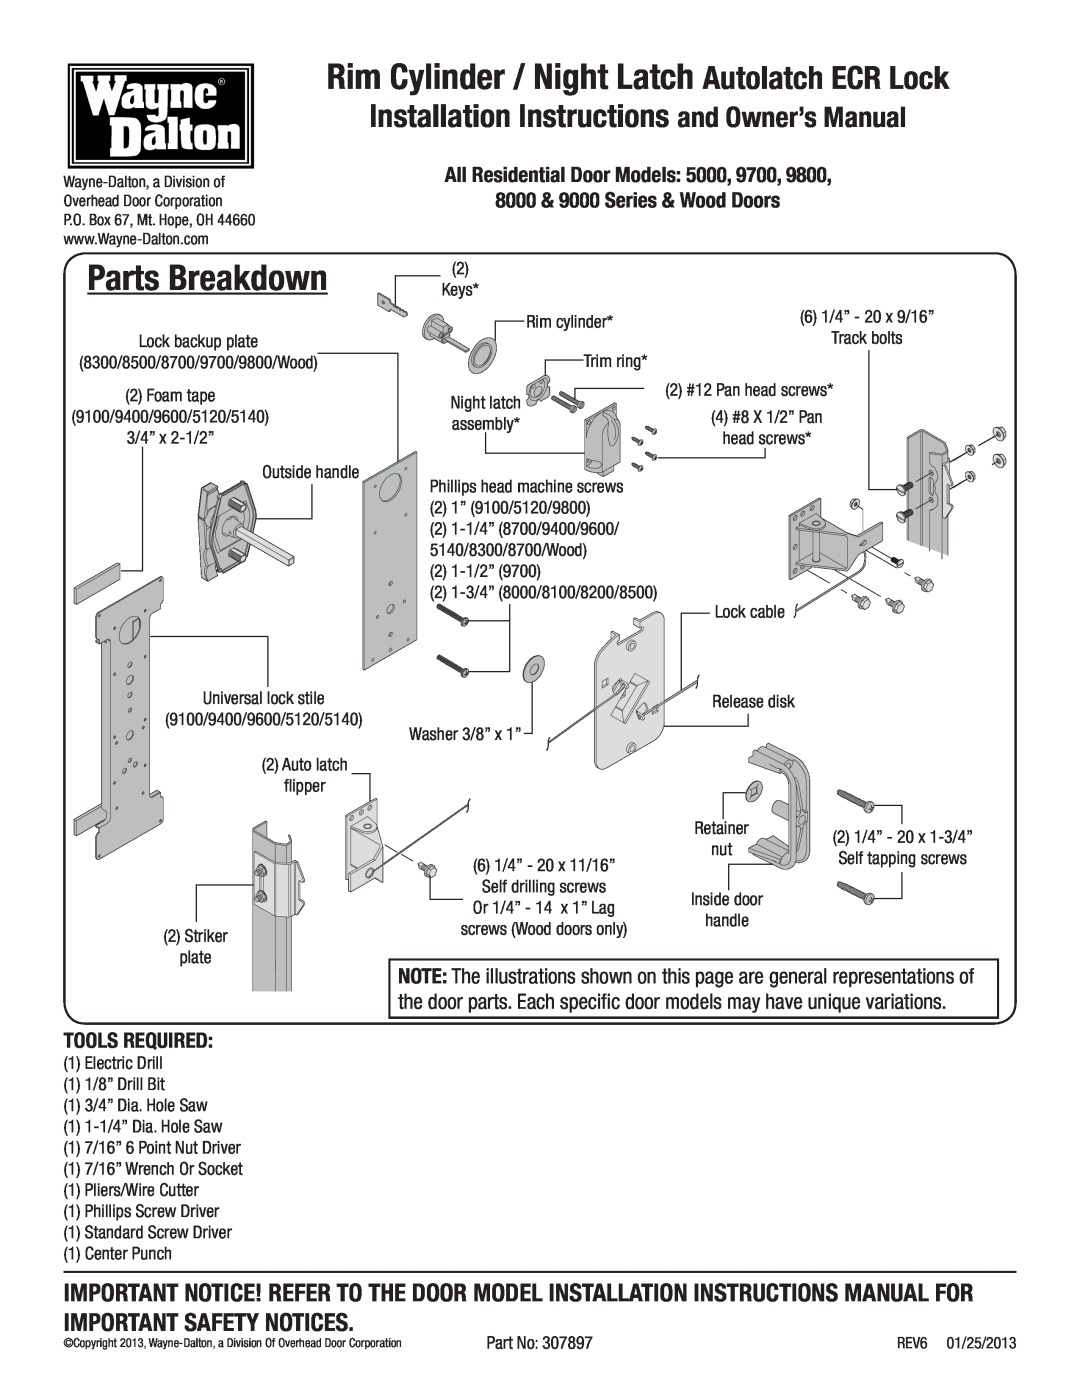 Wayne-Dalton 9800 installation instructions Series - 4 Section 